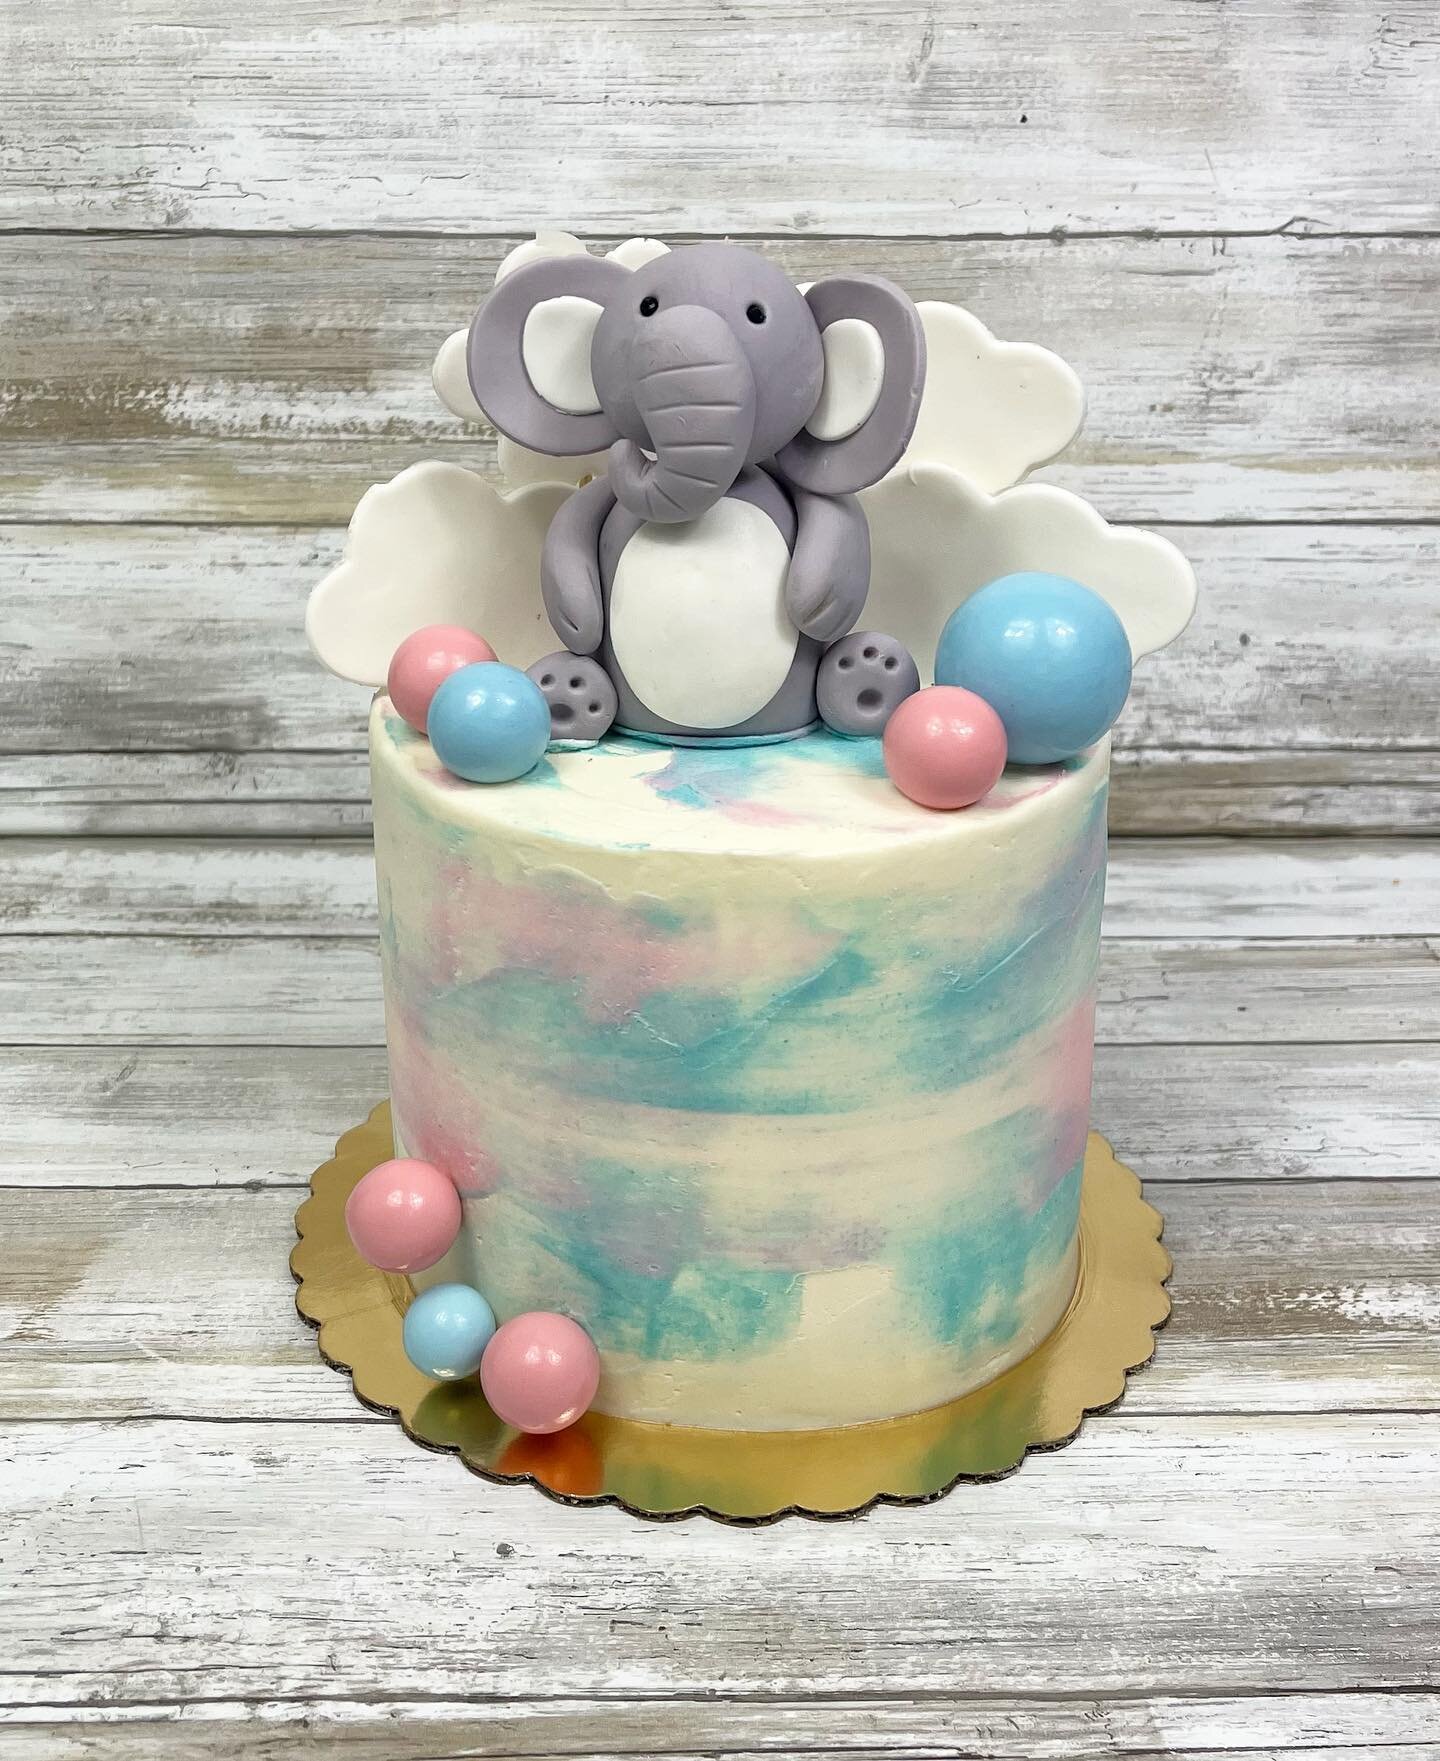 Sweet gender reveal cake..
.
#posh #poshcakes #parker #parkercolorado #elephantcake #genderrevealcake #babyshowercake #denverbakery #instacake #babycakes